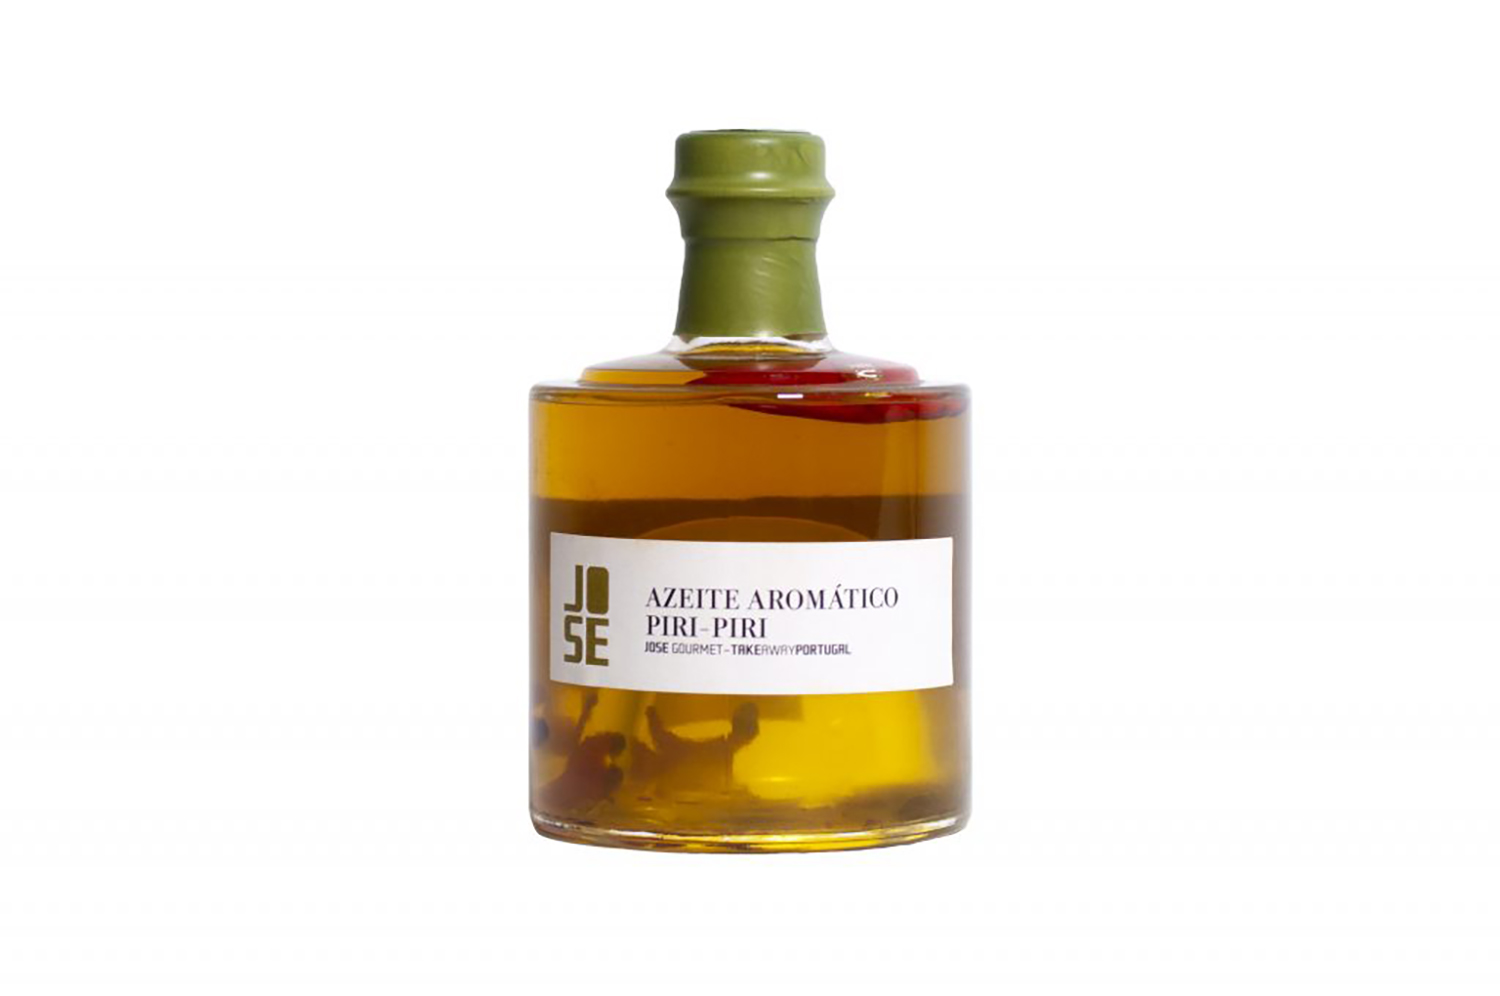 Piri-Piri Aromatic Olive Oil